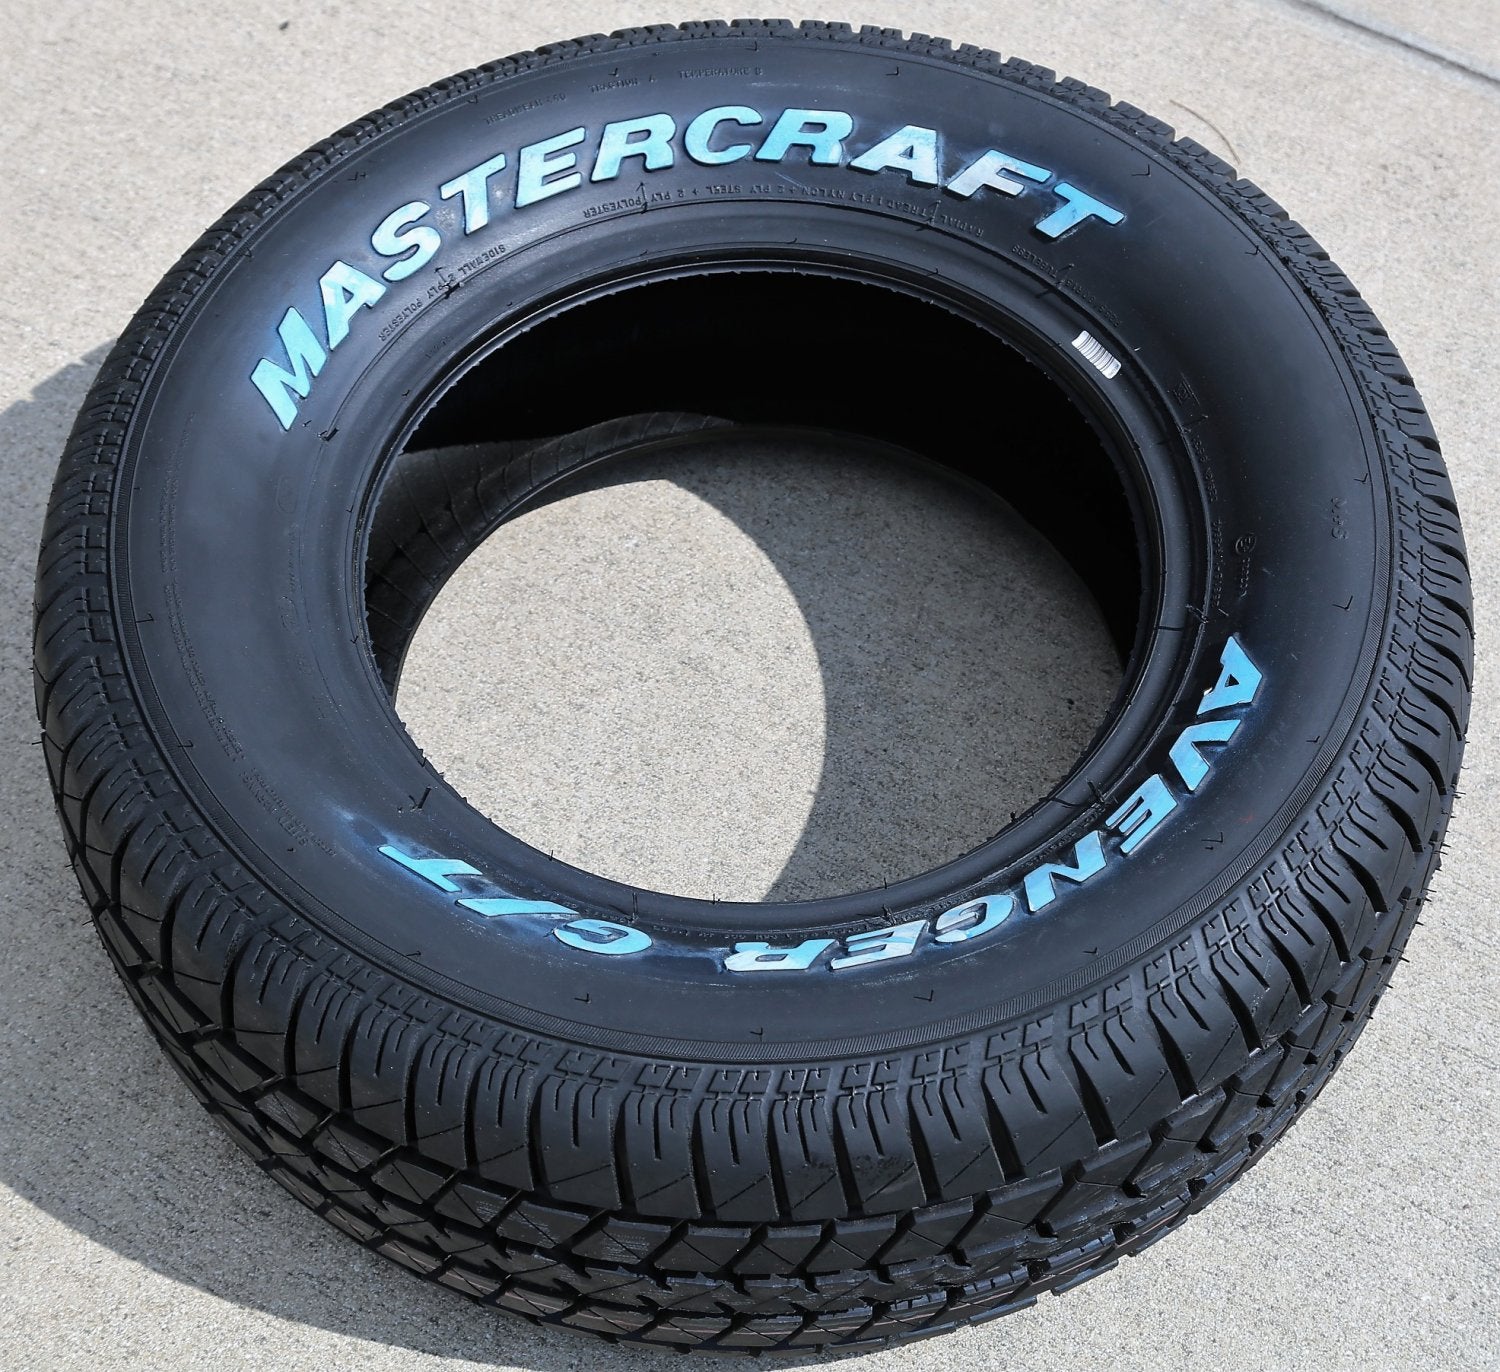 Tire Mastercraft Avenger G/T 215/70R15 97T A/S All Season